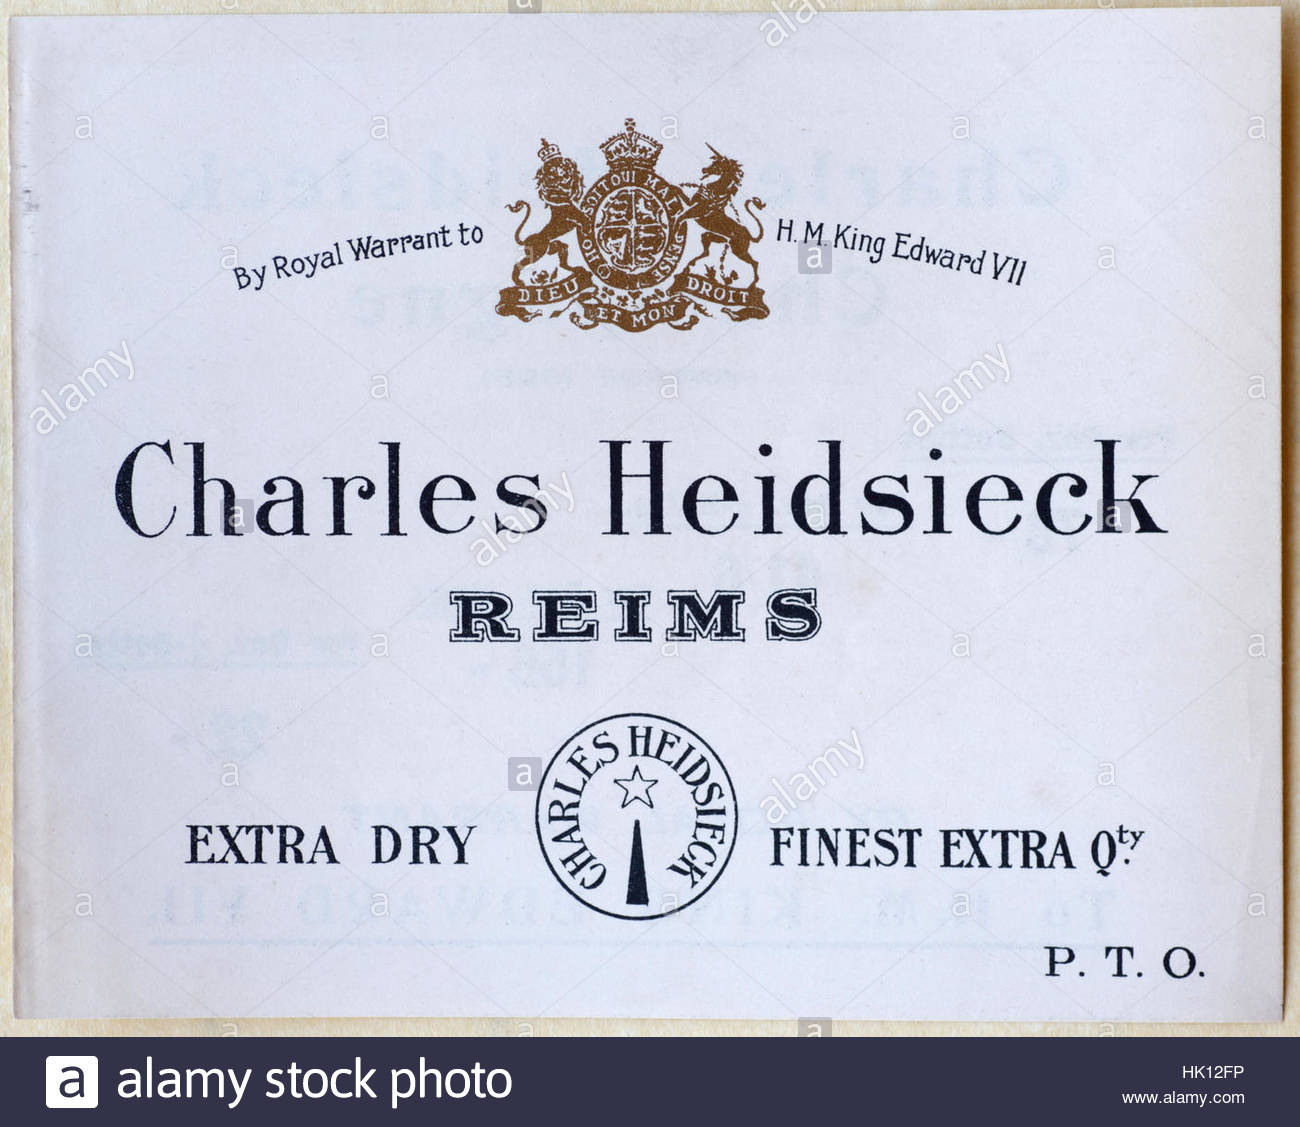 Charles Heidsieck Reims, original vintage advertising from circa 1900 Stock Photo